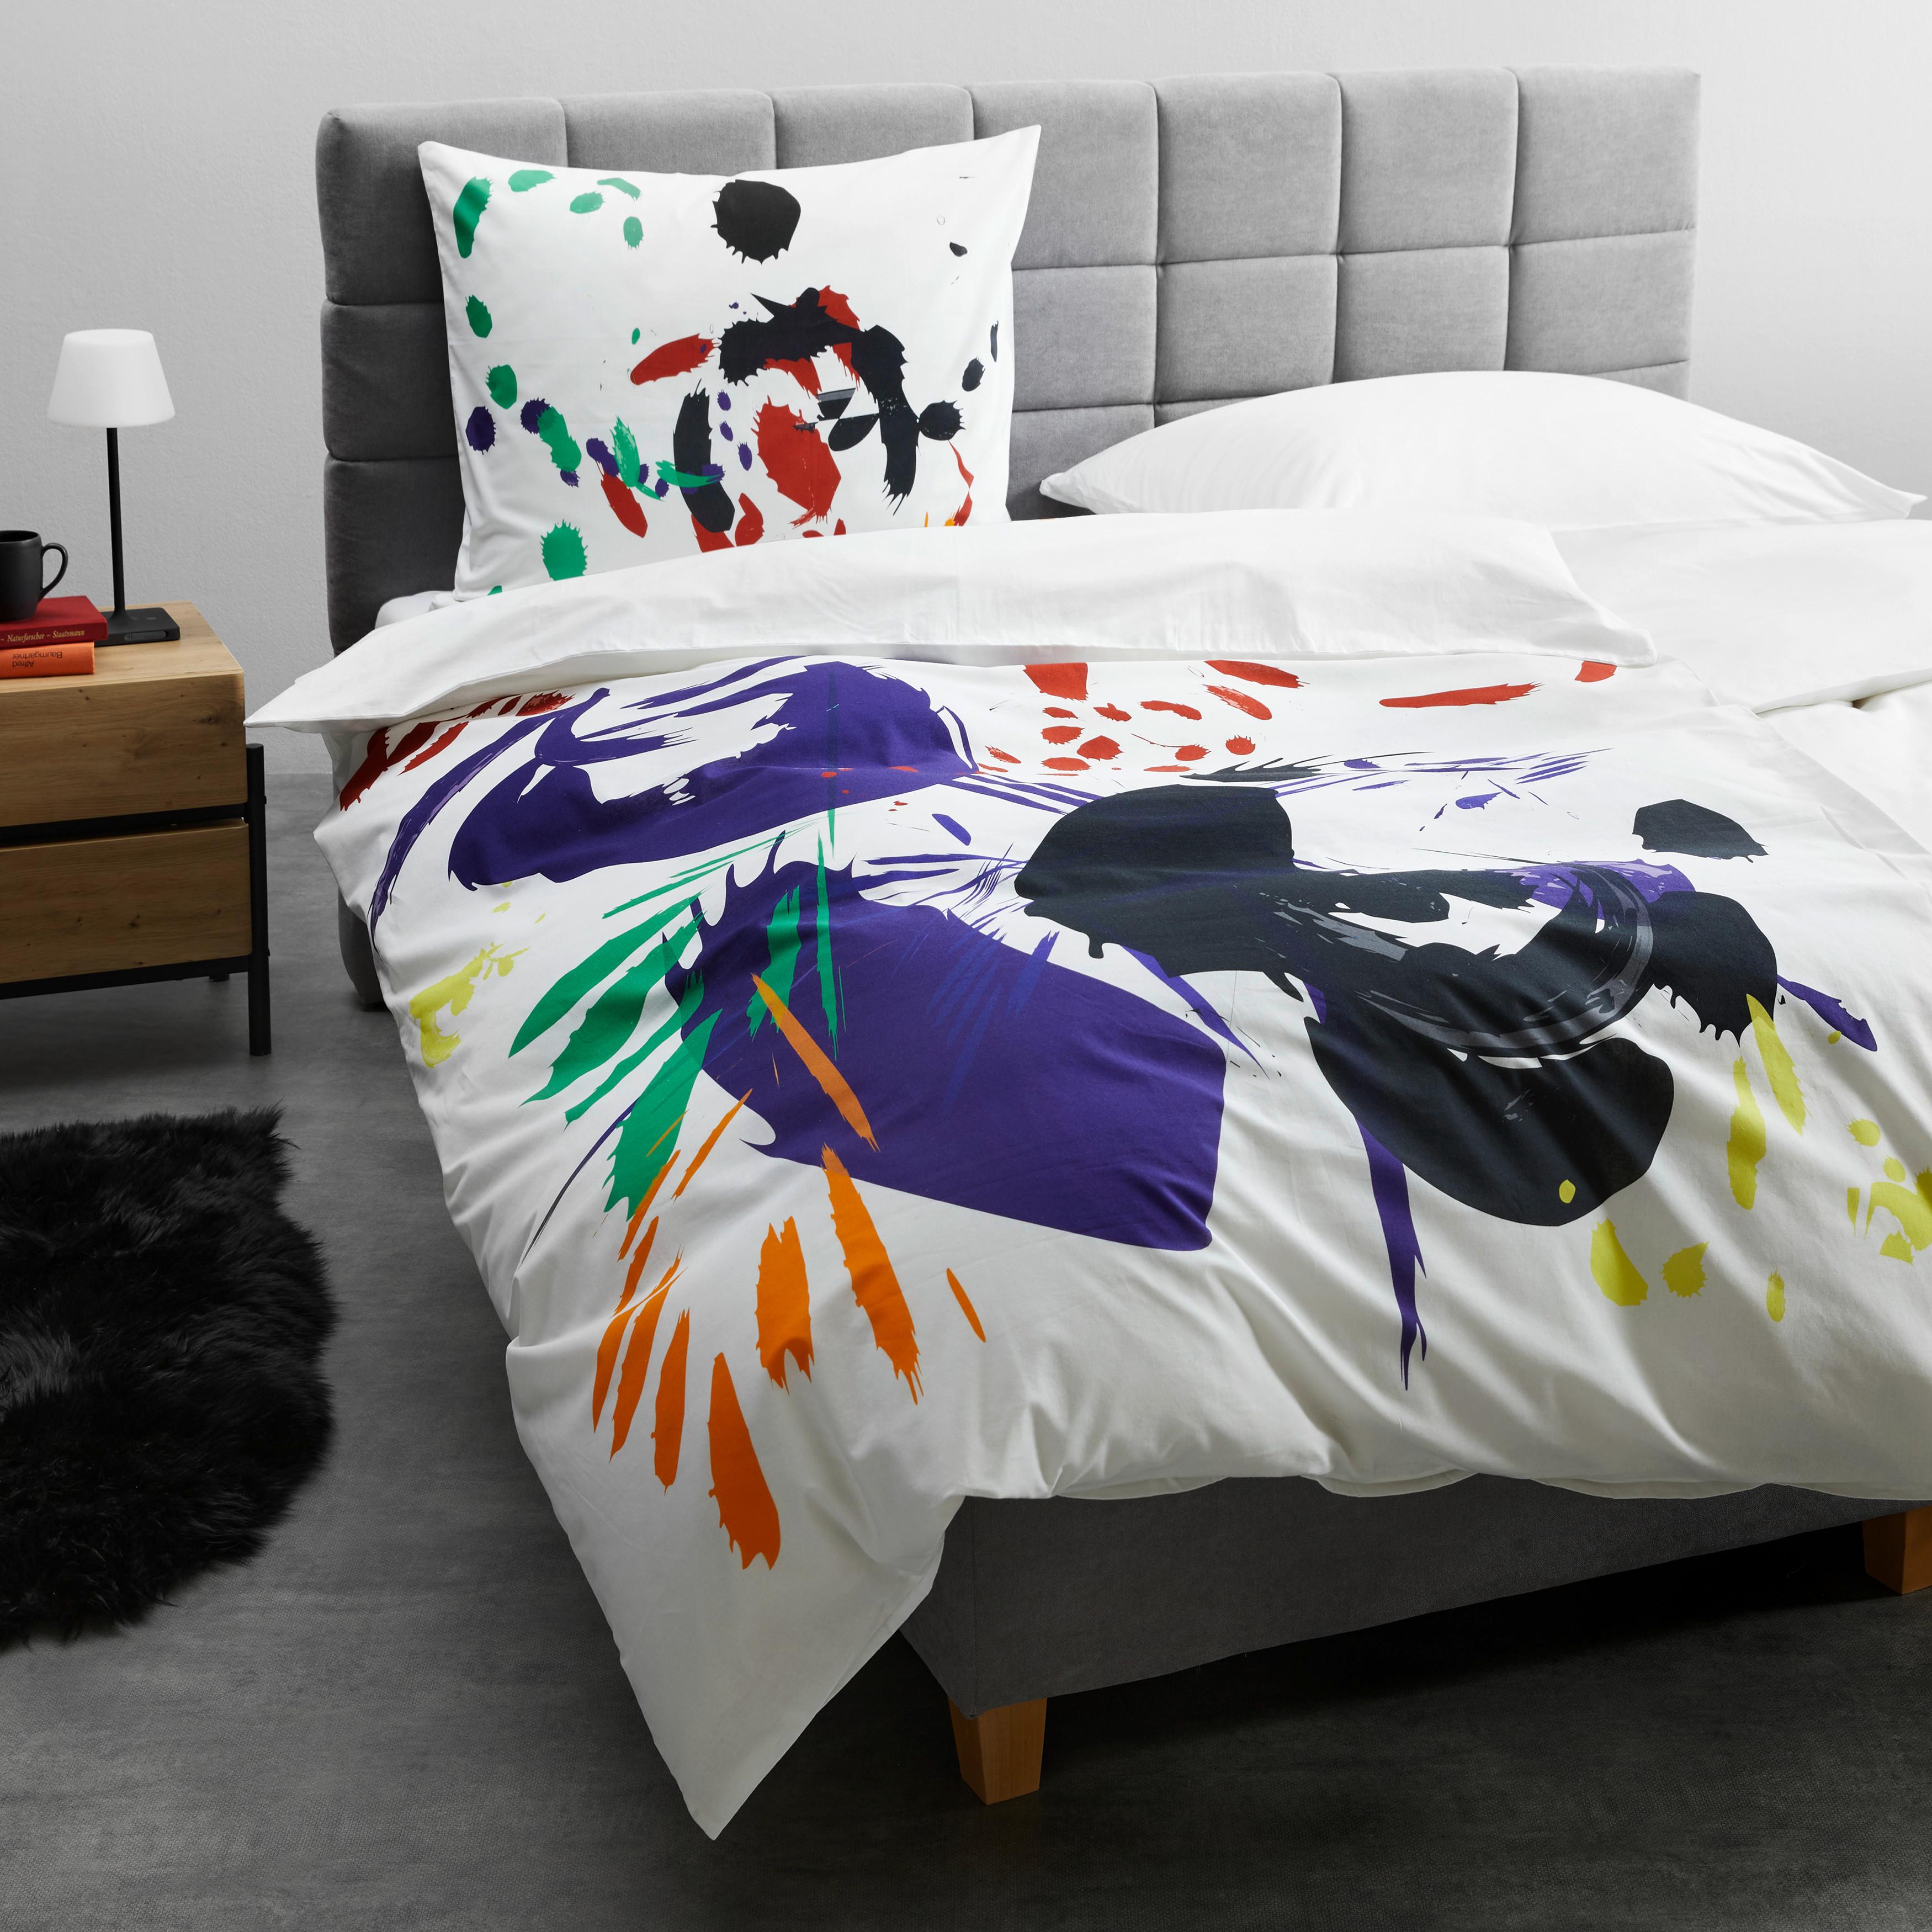 Wendebettwäsche Lenja in Multicolor ca. 140x200cm - Multicolor, KONVENTIONELL, Textil (140/200cm) - Bessagi Home